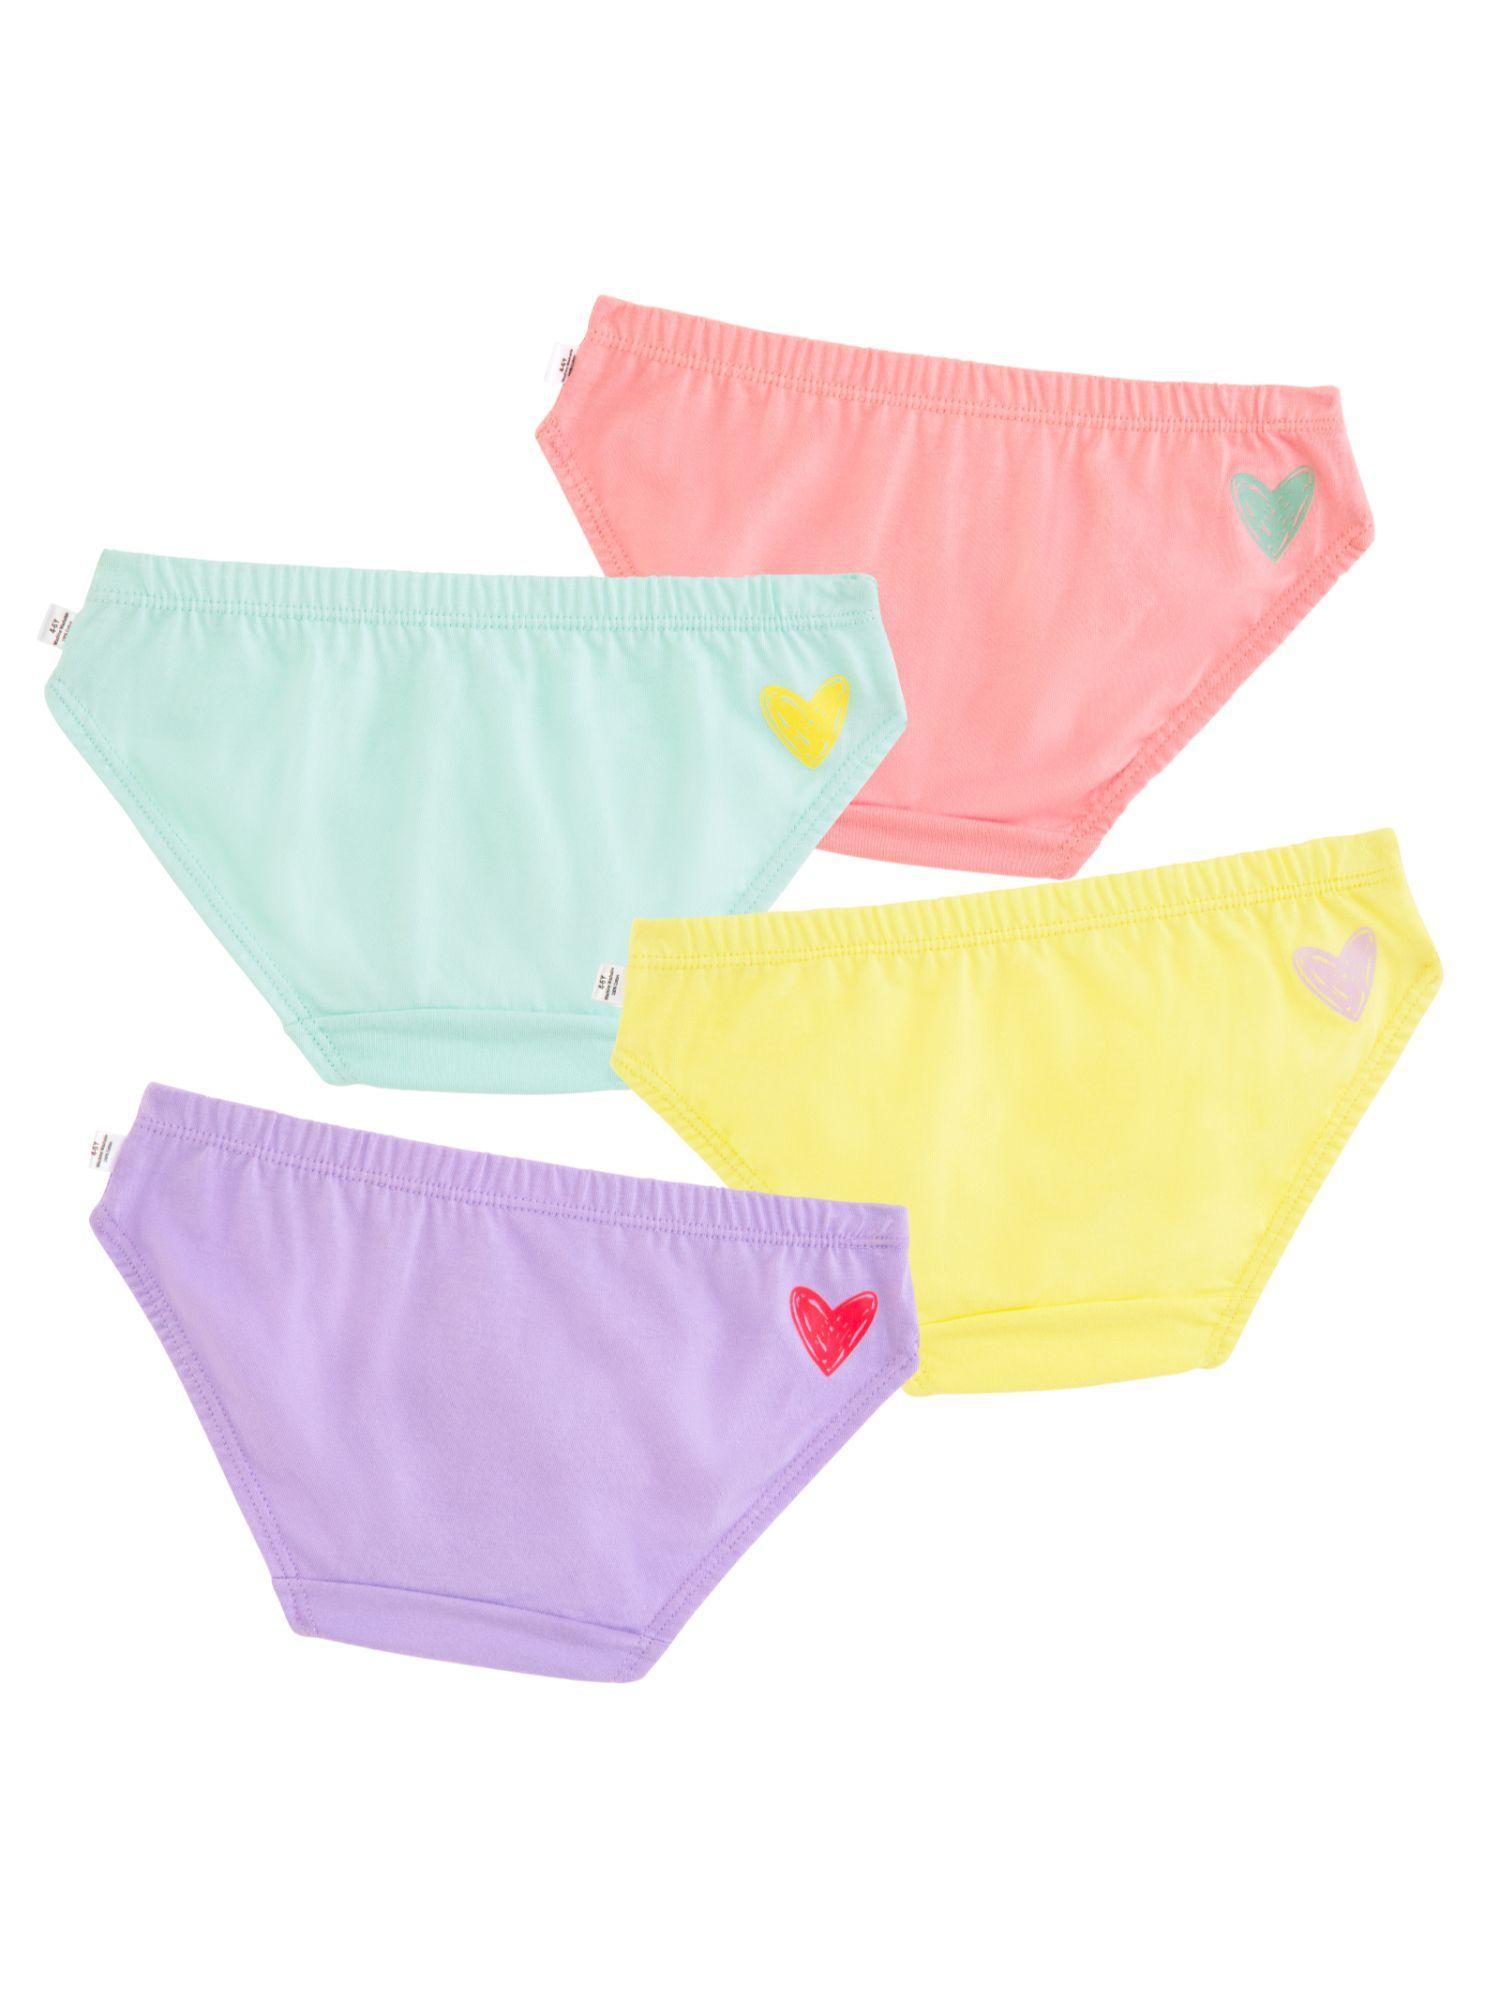 heartthrob - girl underwear (pack of 4)